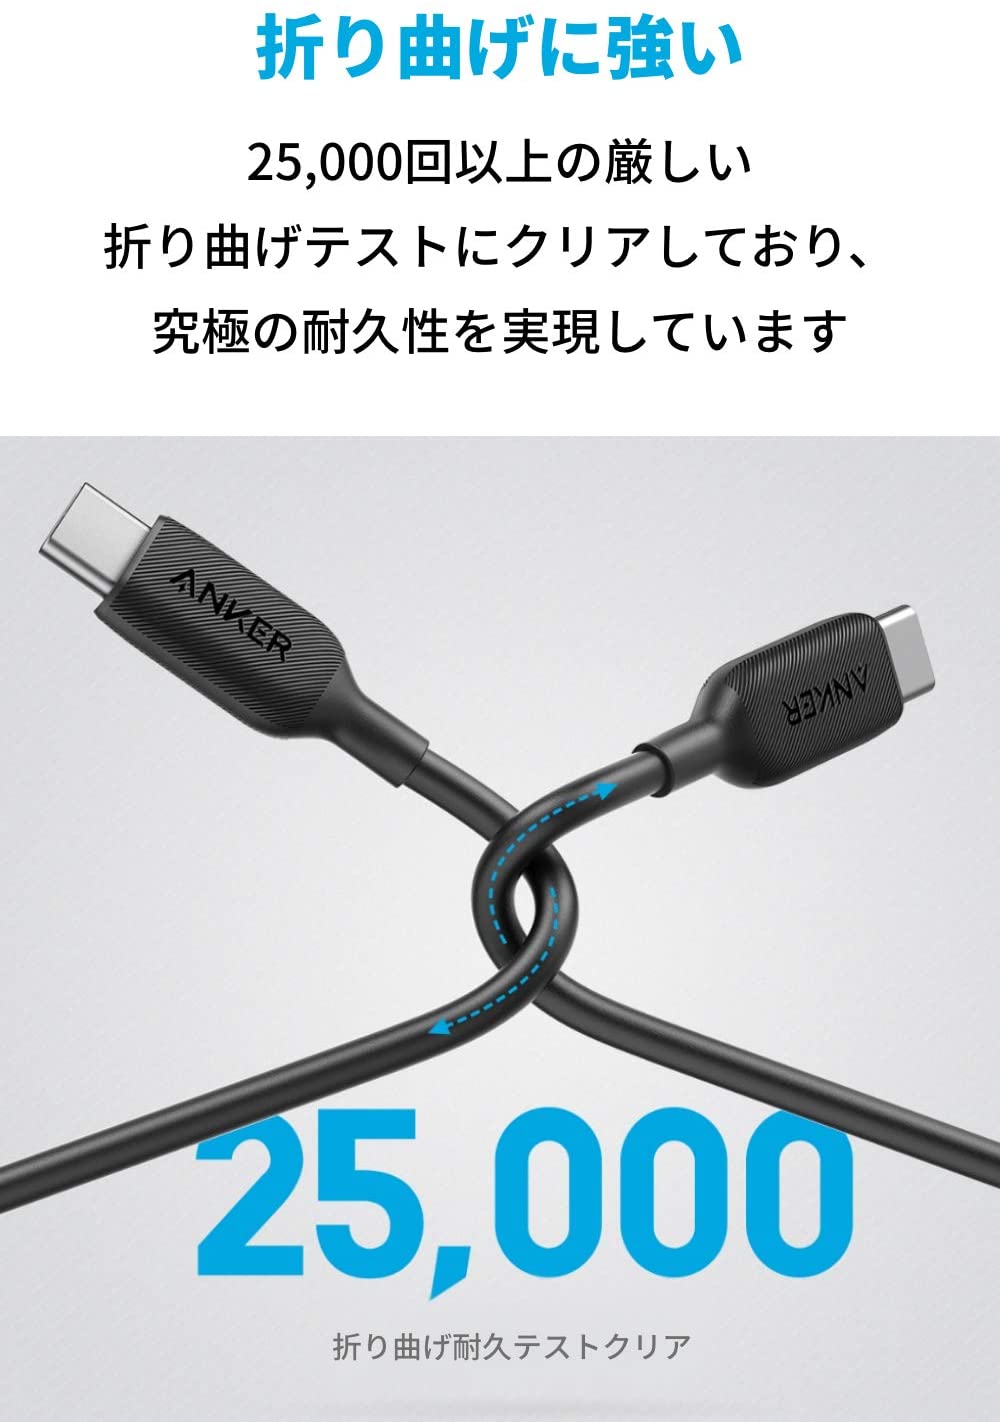 Anker 543 エコフレンドリー USB-C USB-C ケーブル 植物由来素材 240W